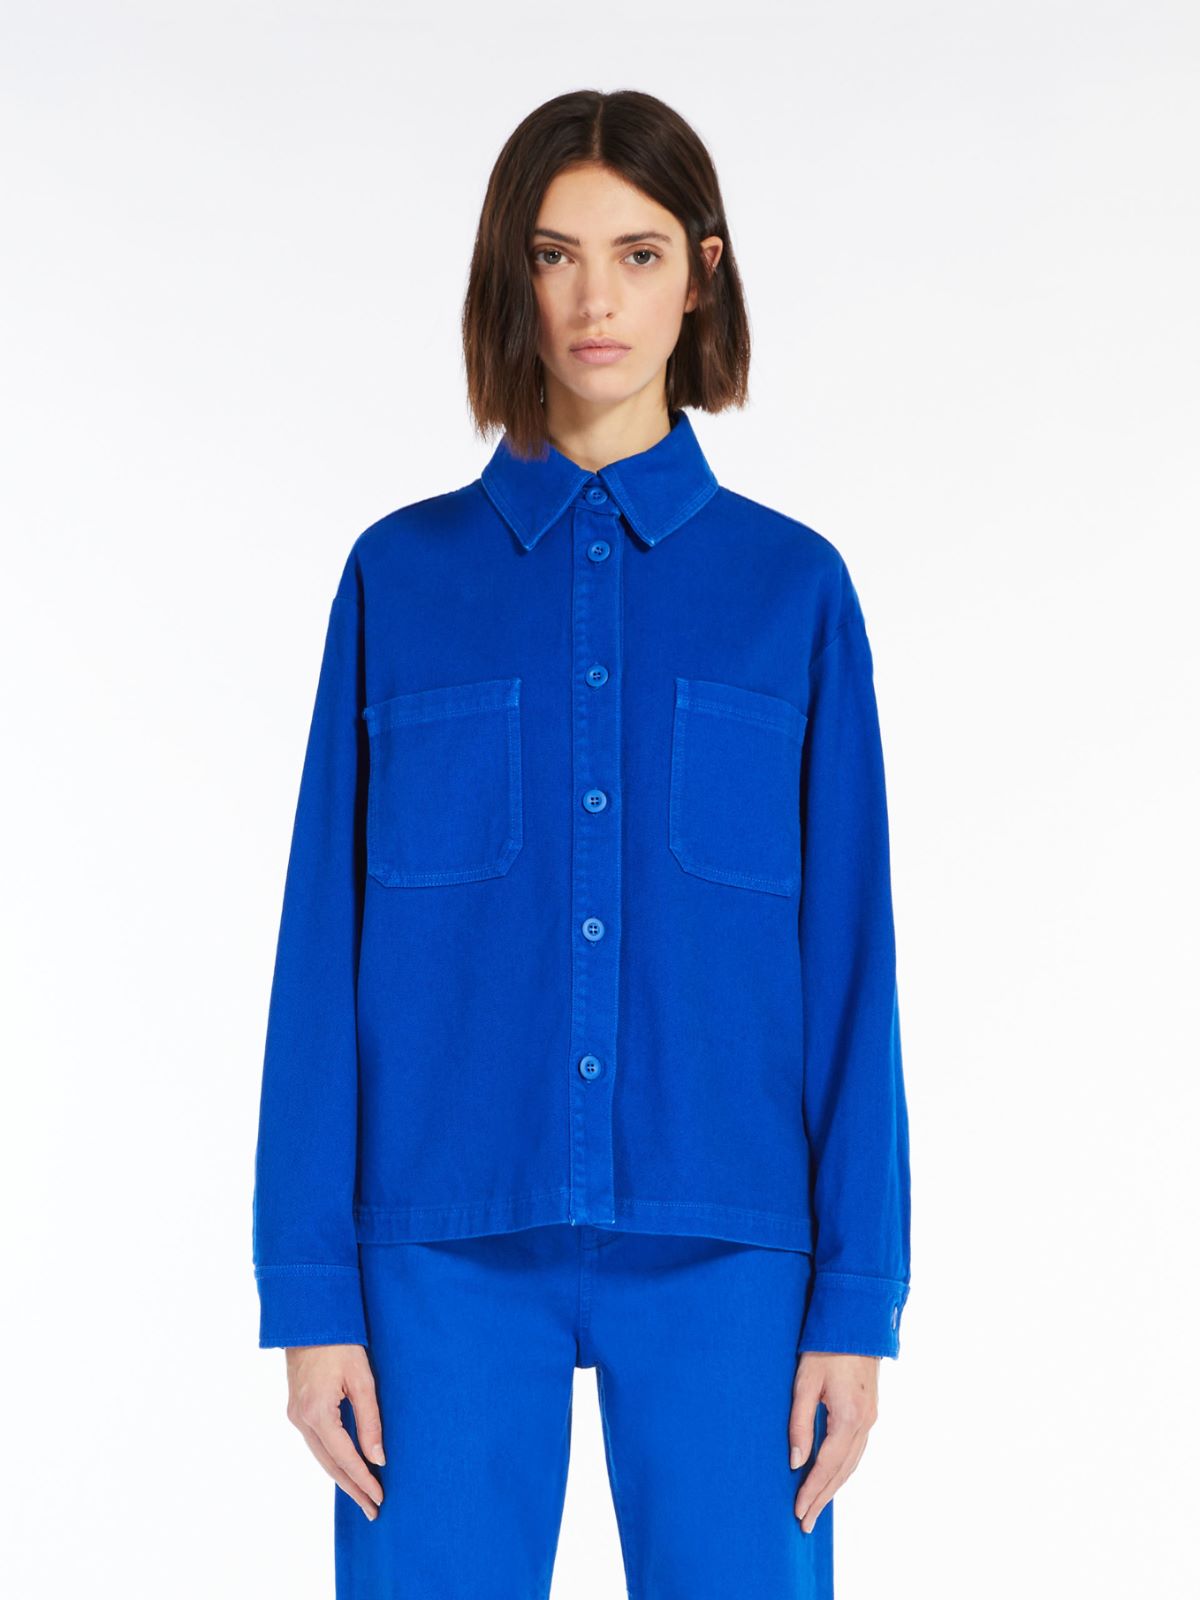 Jacket in organic cotton - CORNFLOWER BLUE - Weekend Max Mara - 2